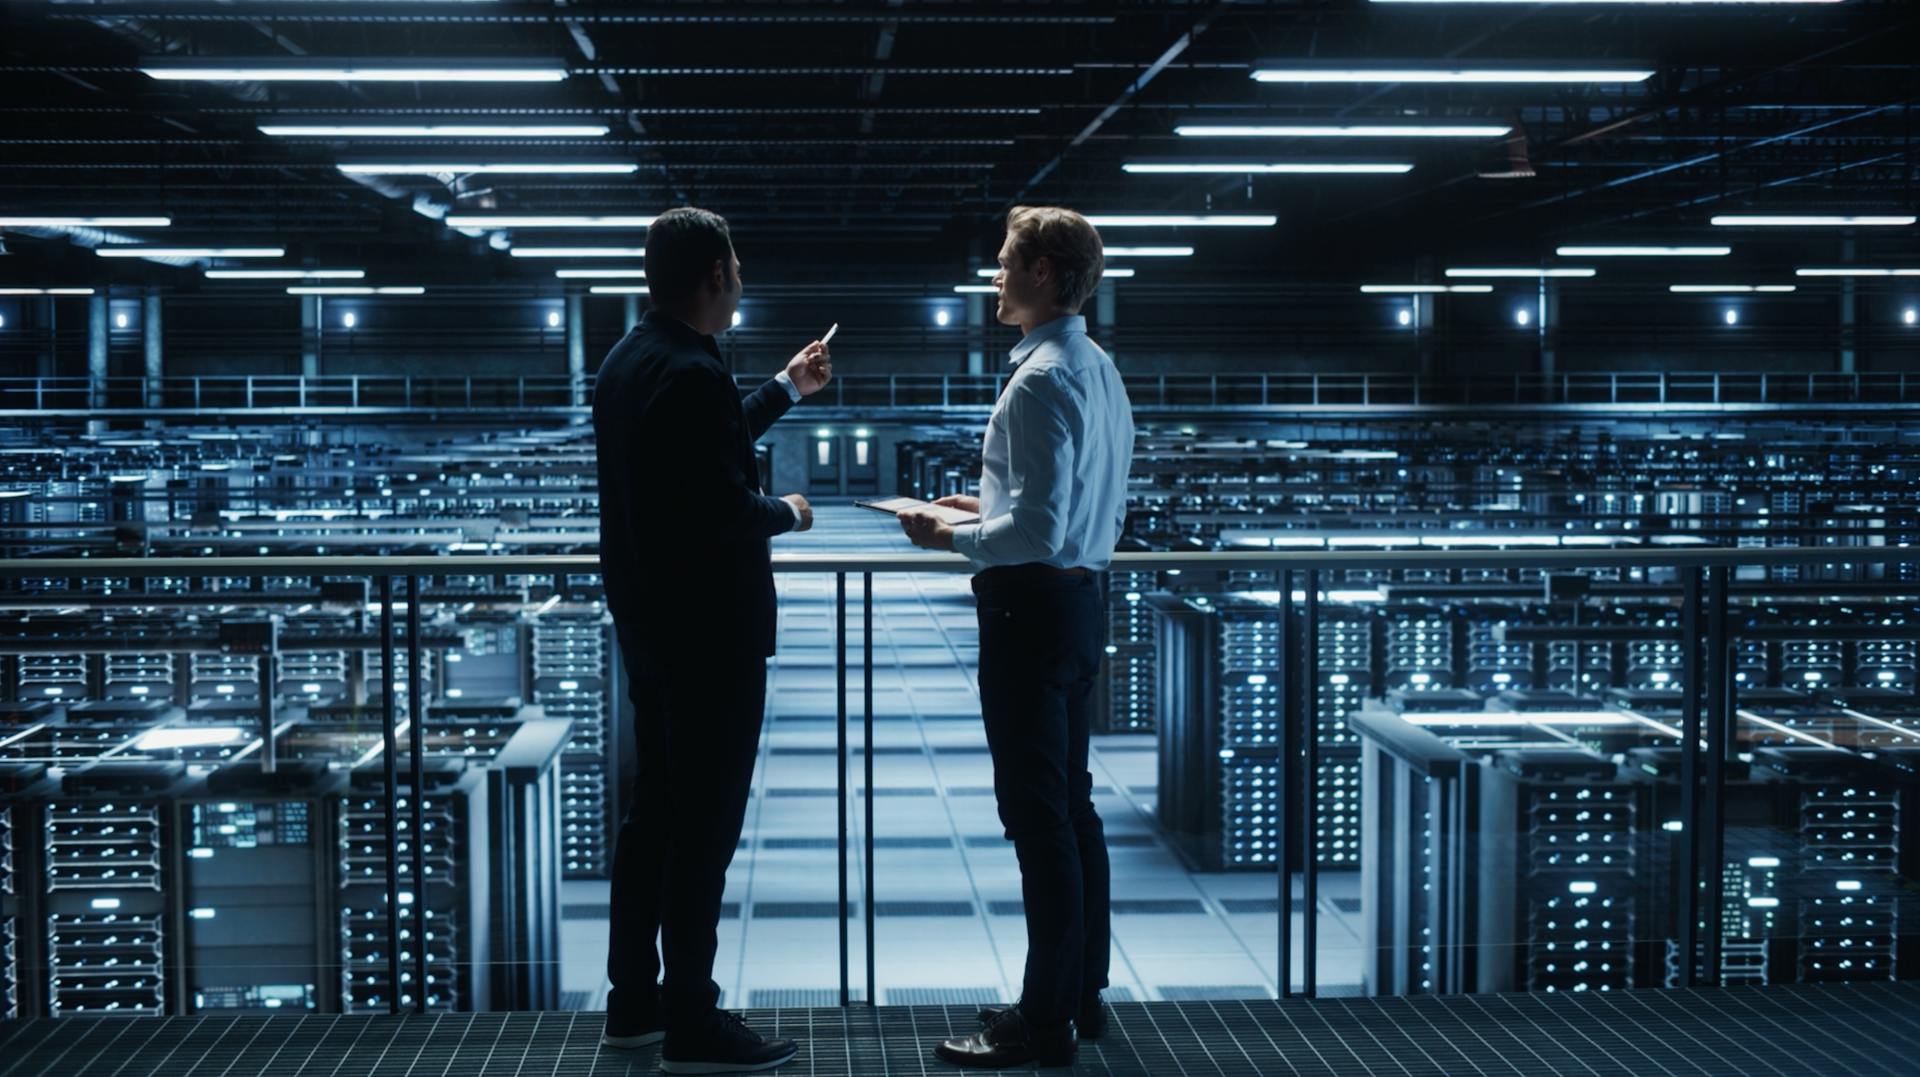 Two men standing on a platform above data centre servers